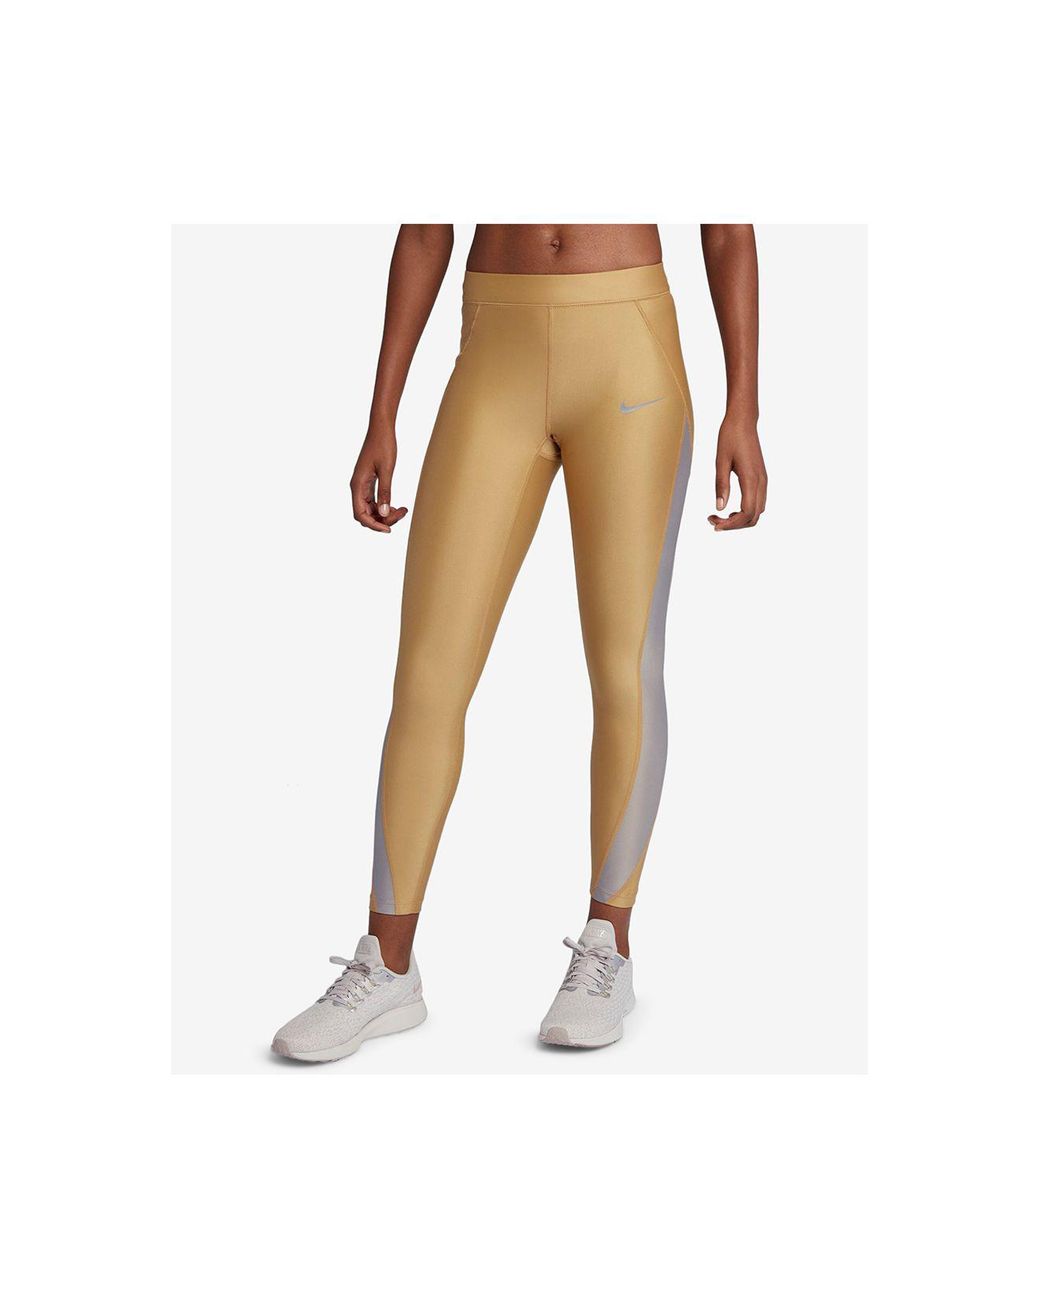 Nike Women's Dri-FIT Running Leggings - Macy's